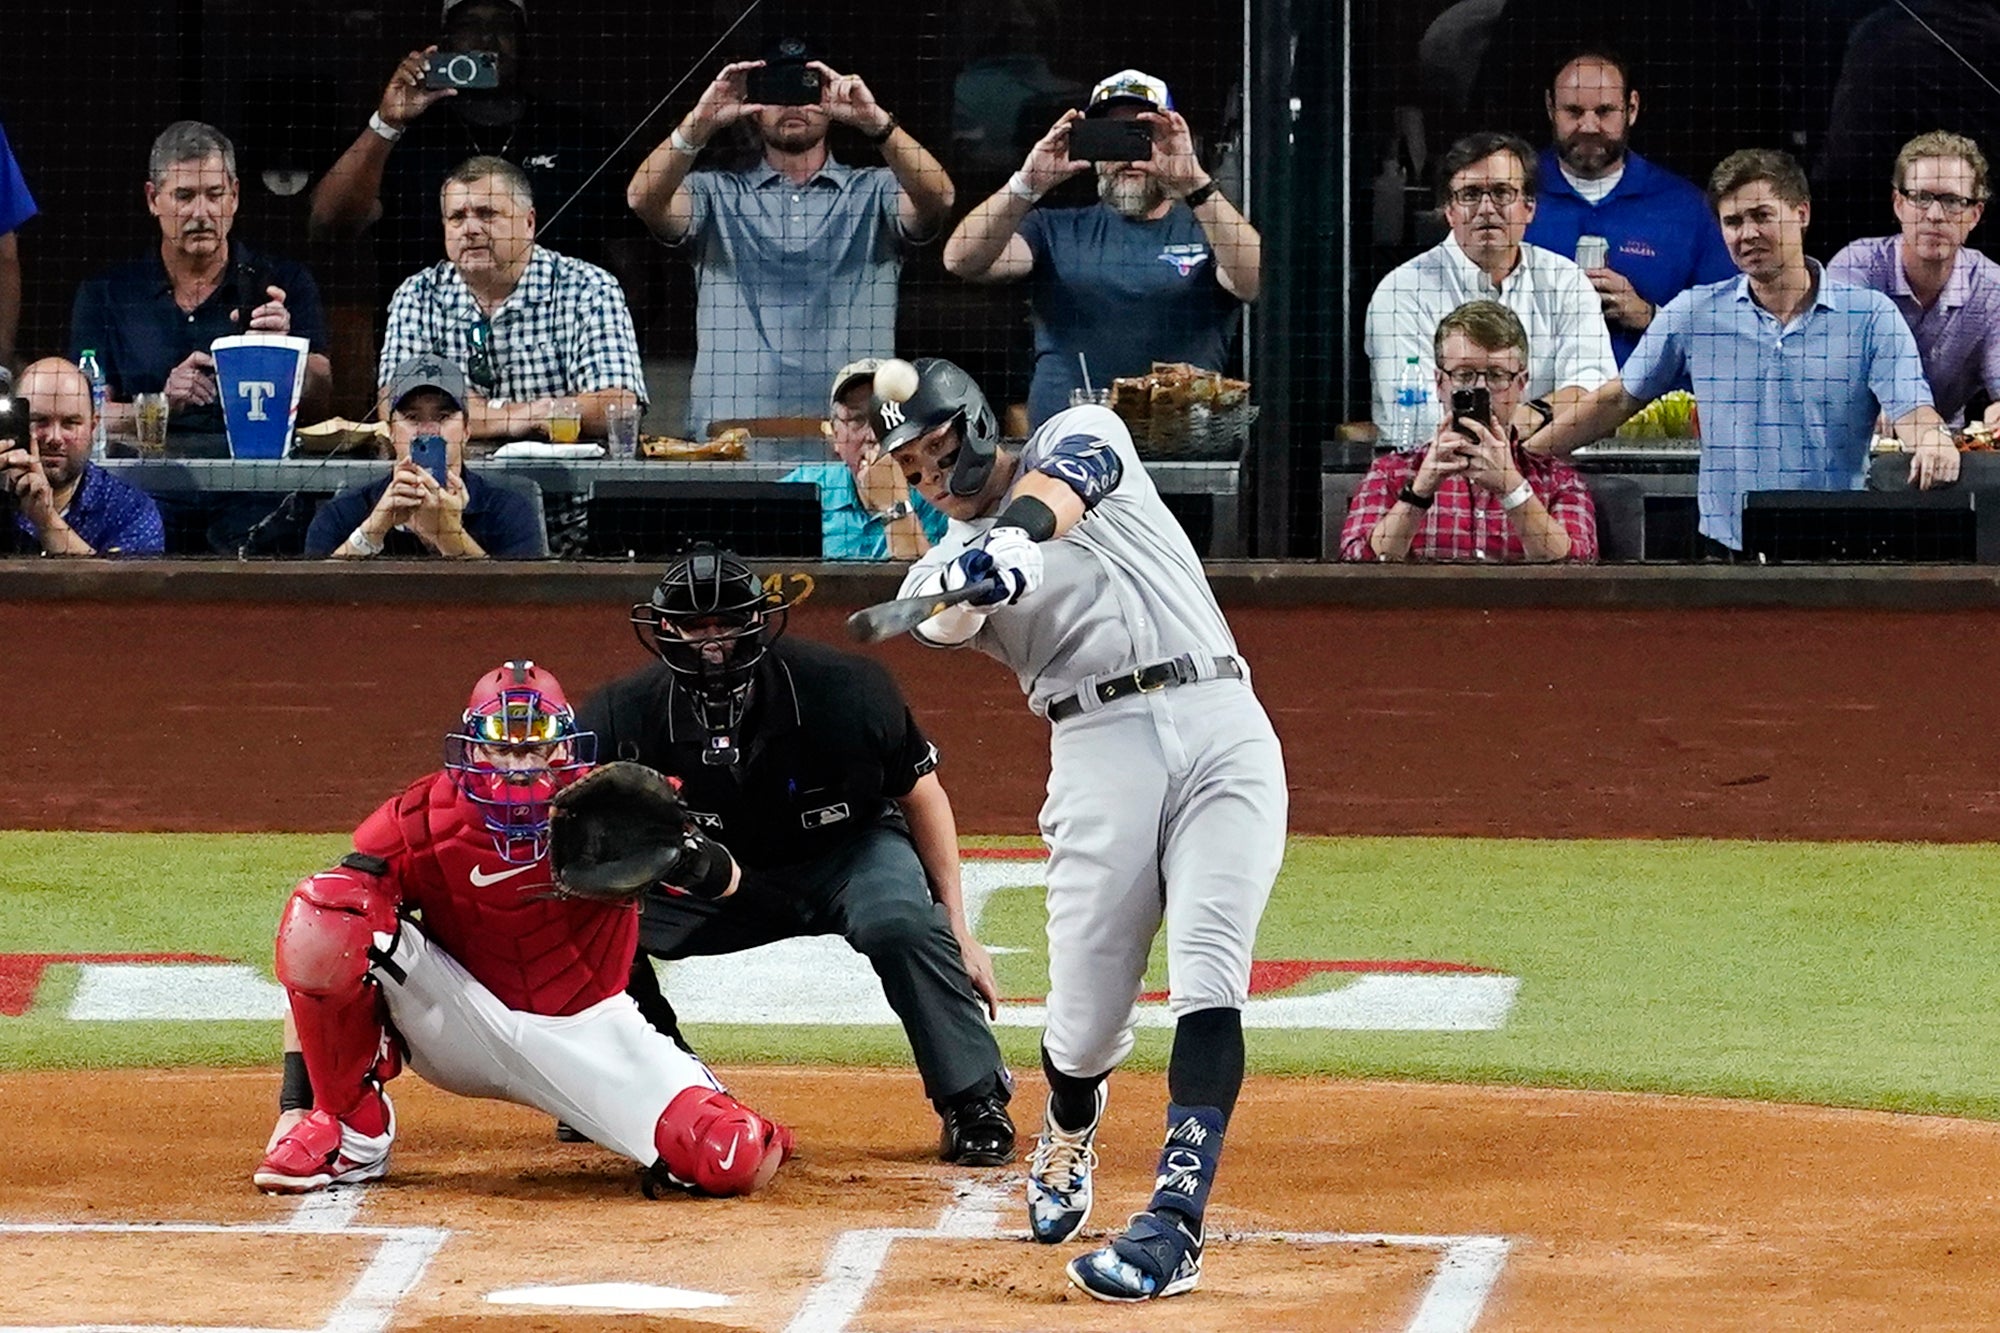 Yankees star Judge hits 62nd homer to break Maris' AL record - WHYY